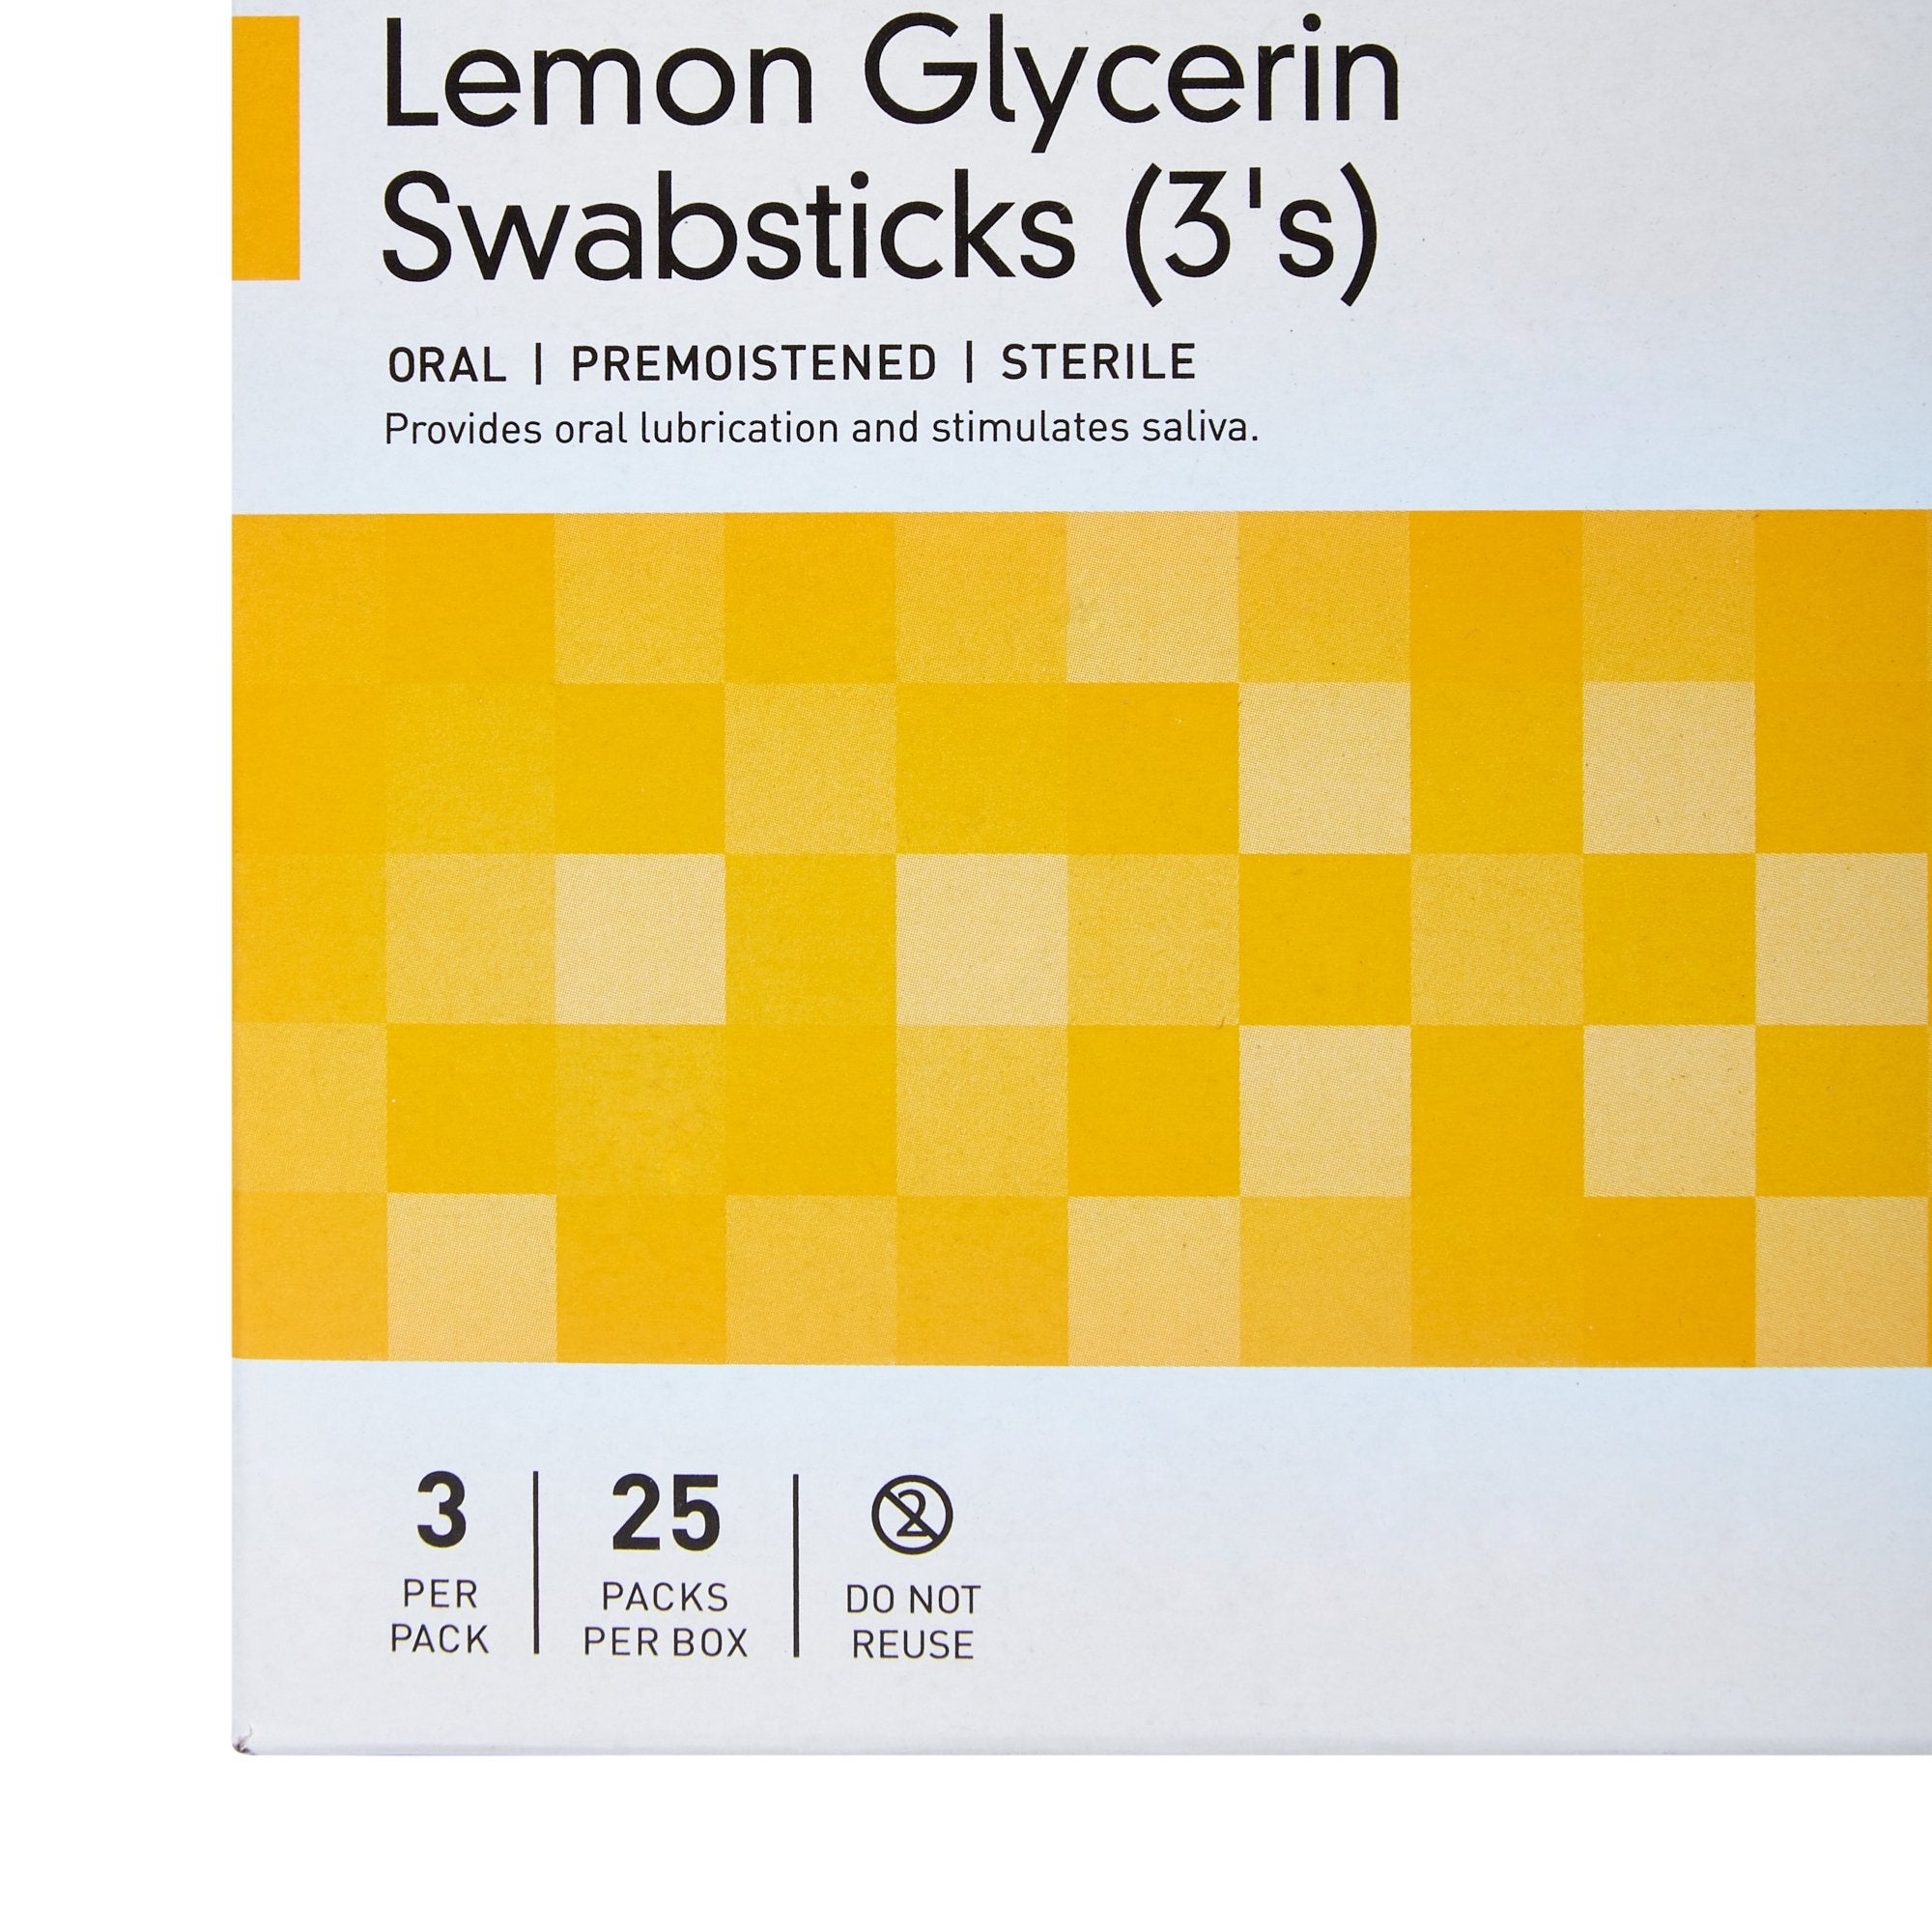 Oral Swabstick McKesson Lemon Glycerin